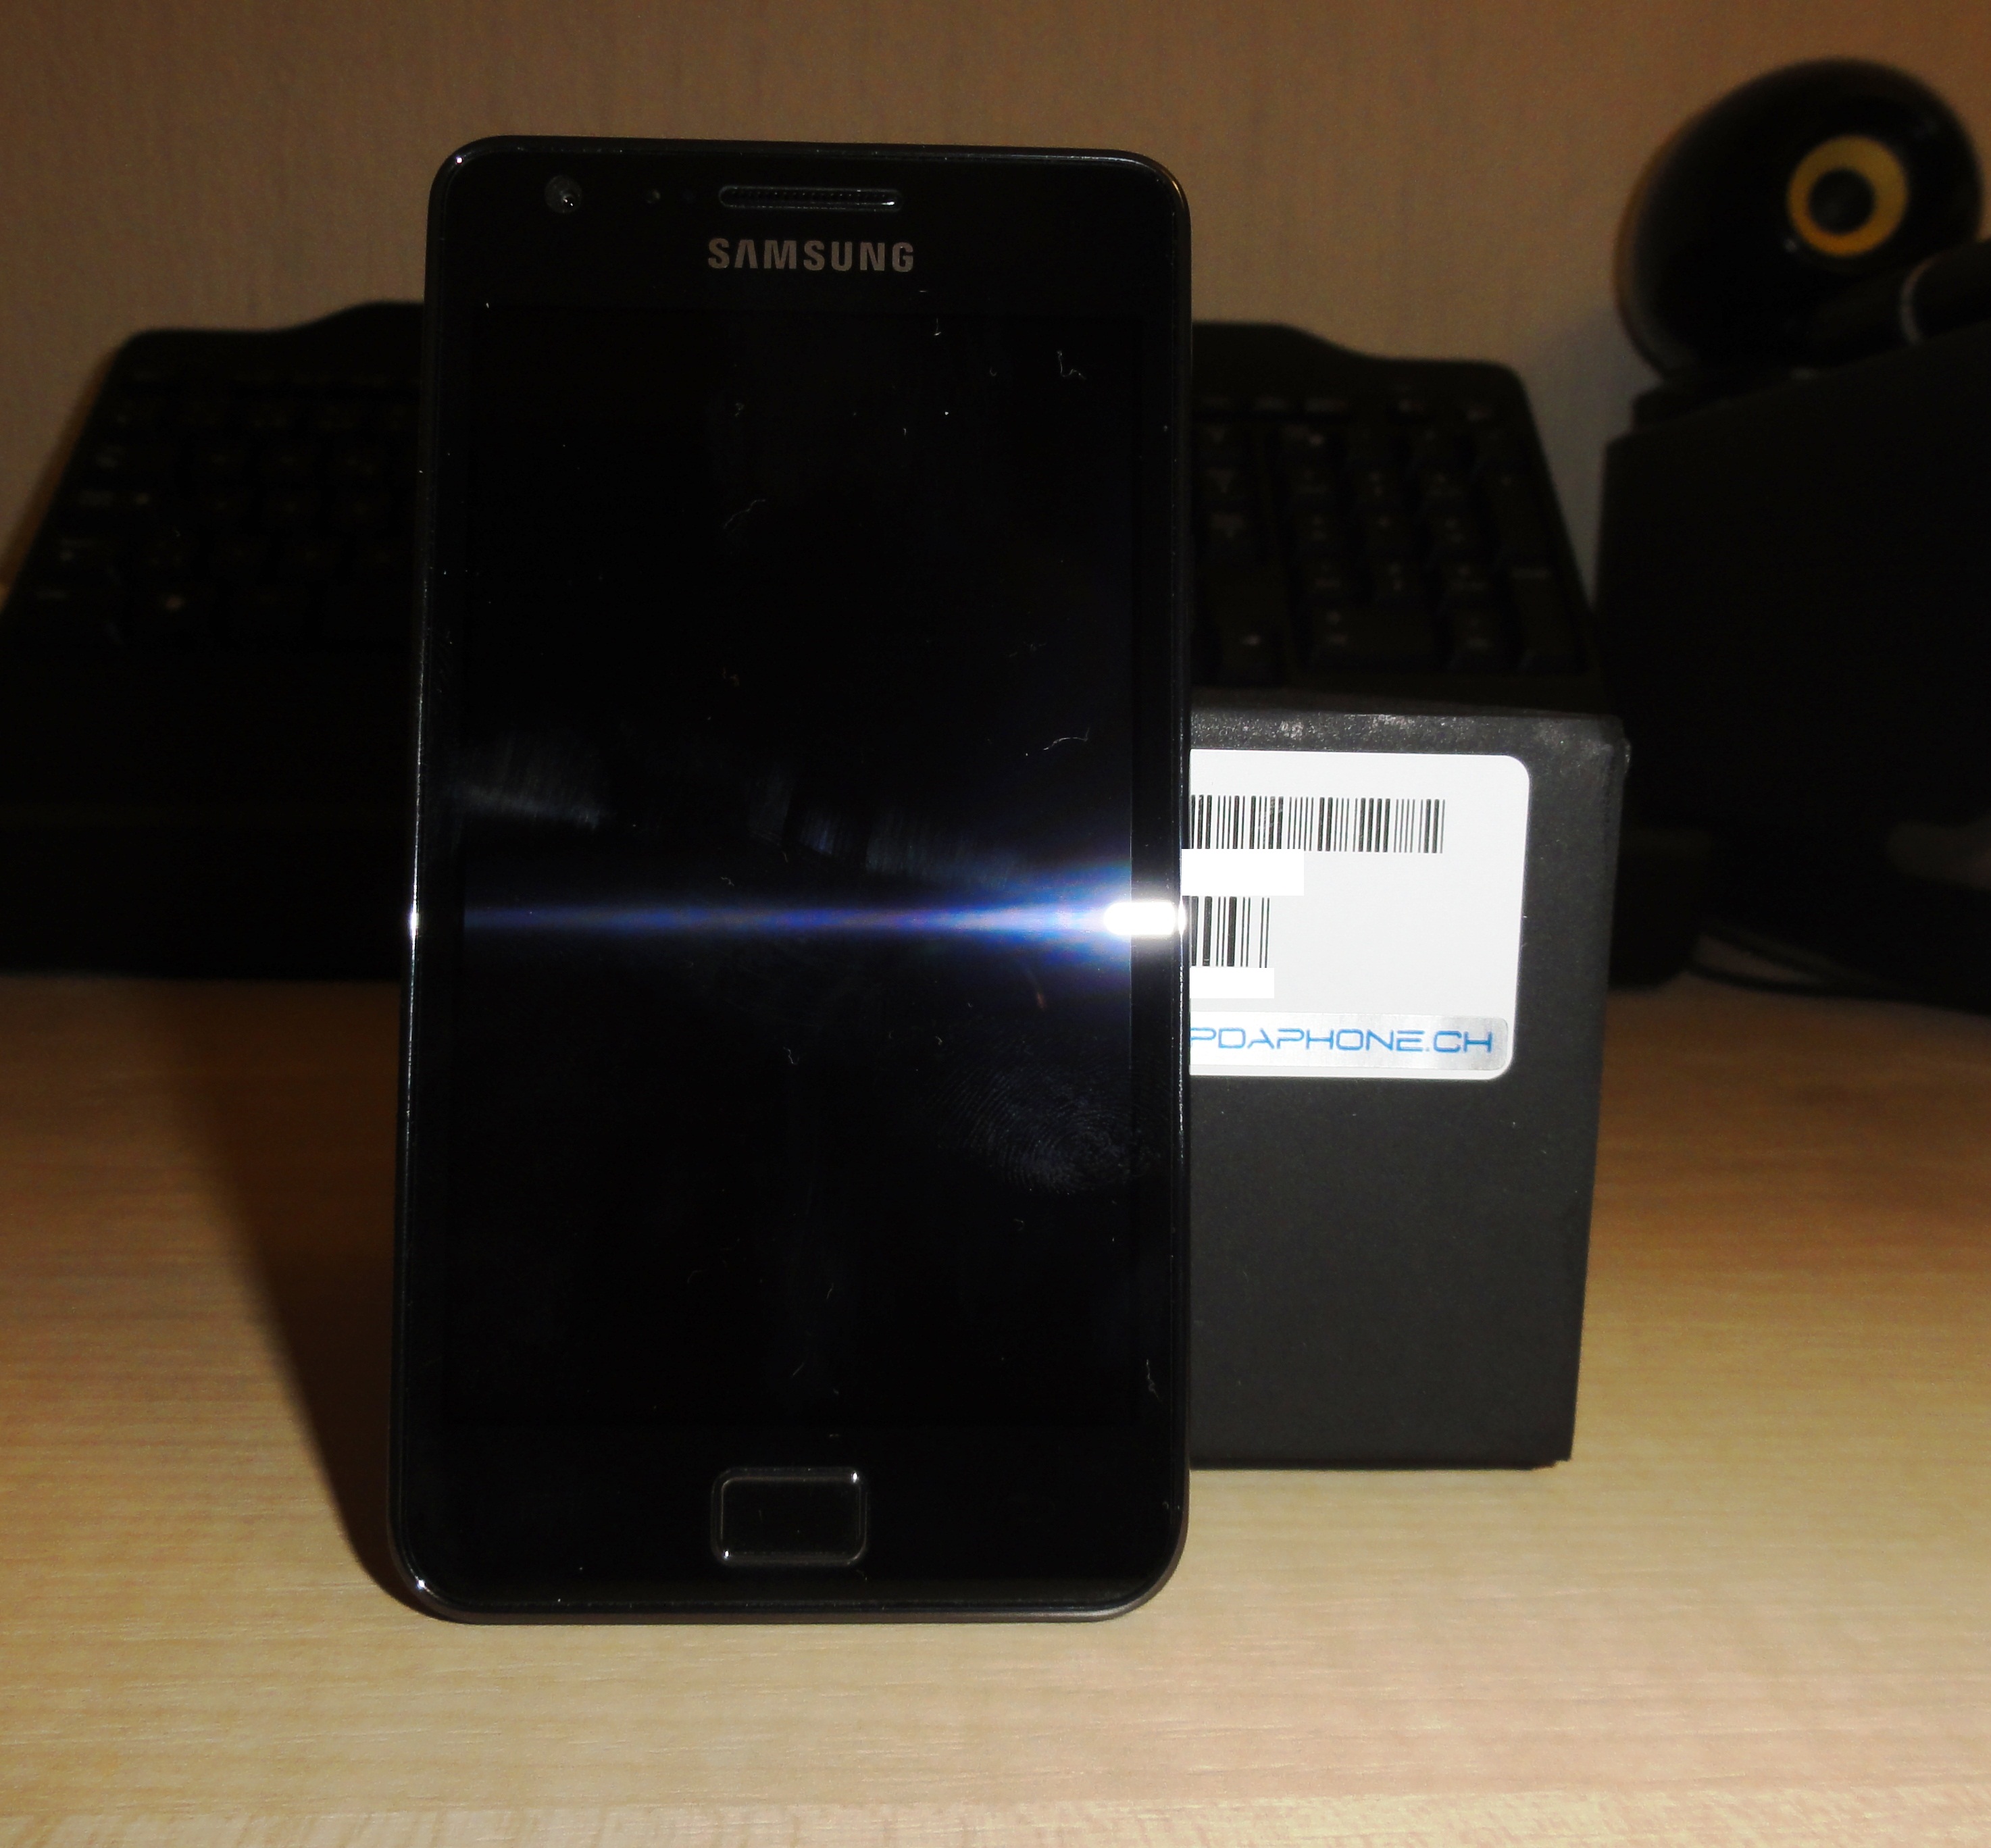 [AVIS] Qui va acheter le Samsung Galaxy S 2 (II) sous Android ? - Page 6 110526110518724208222510